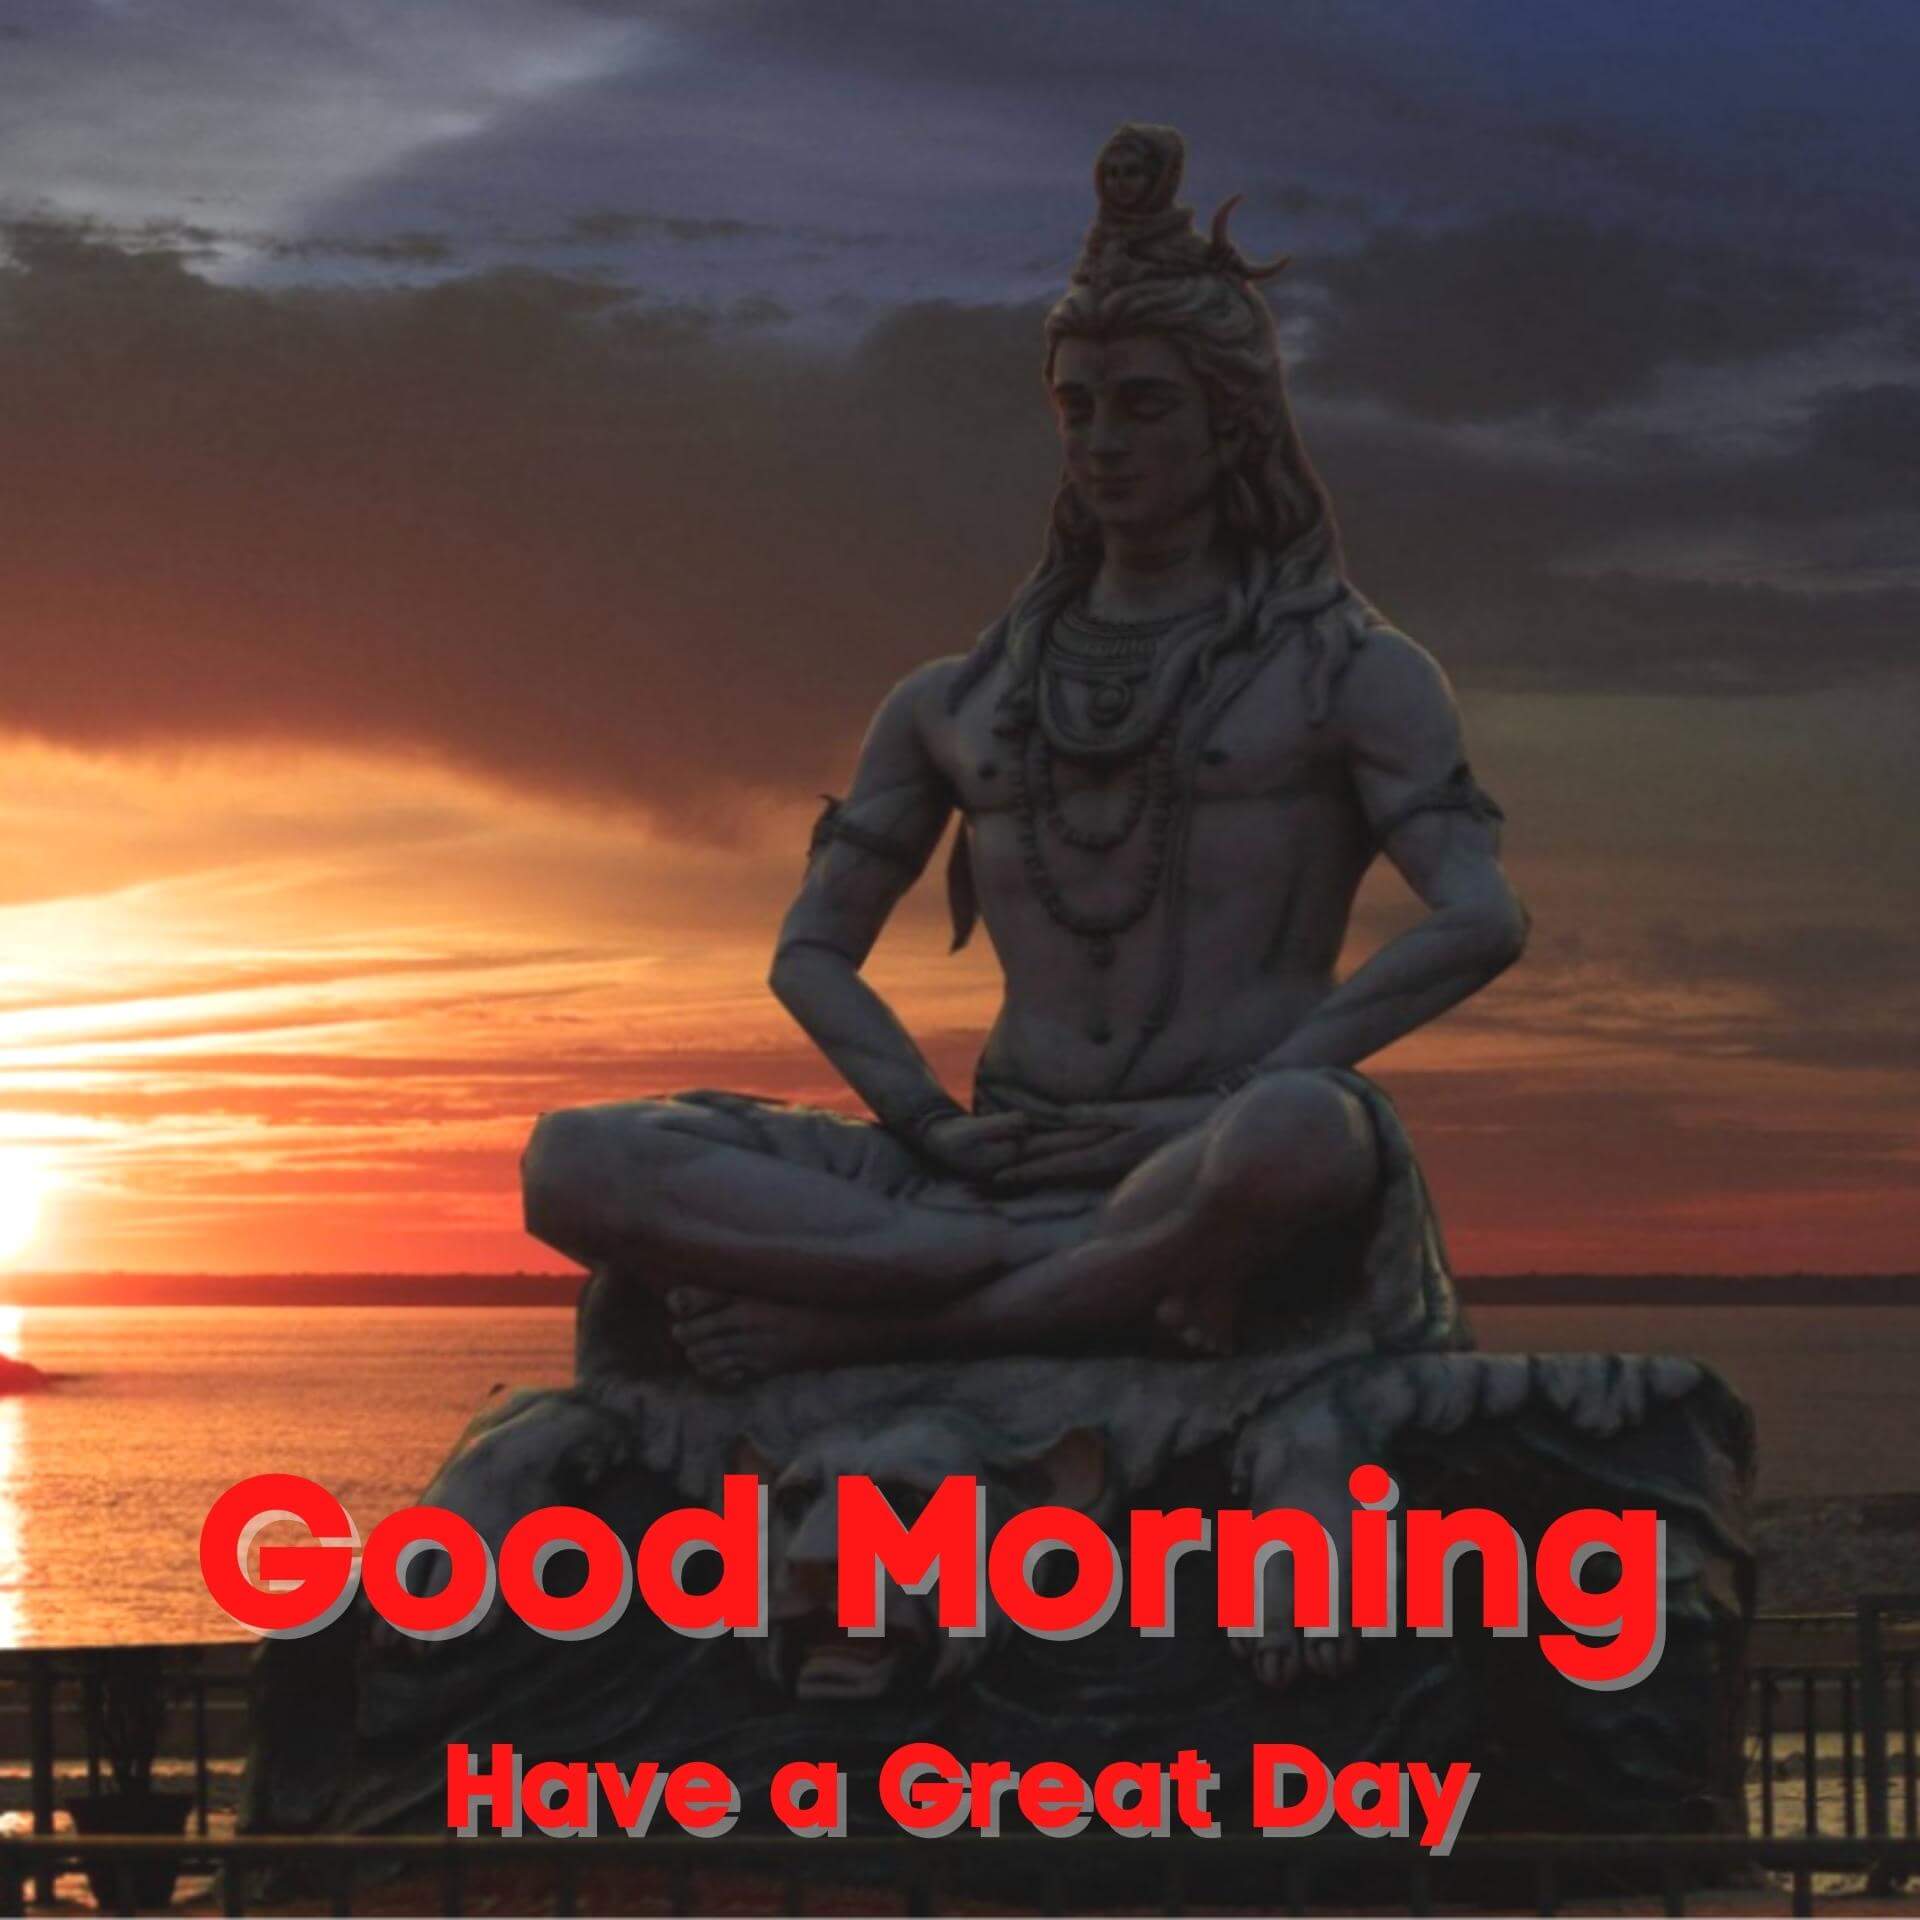 Shiva Good Morning Images